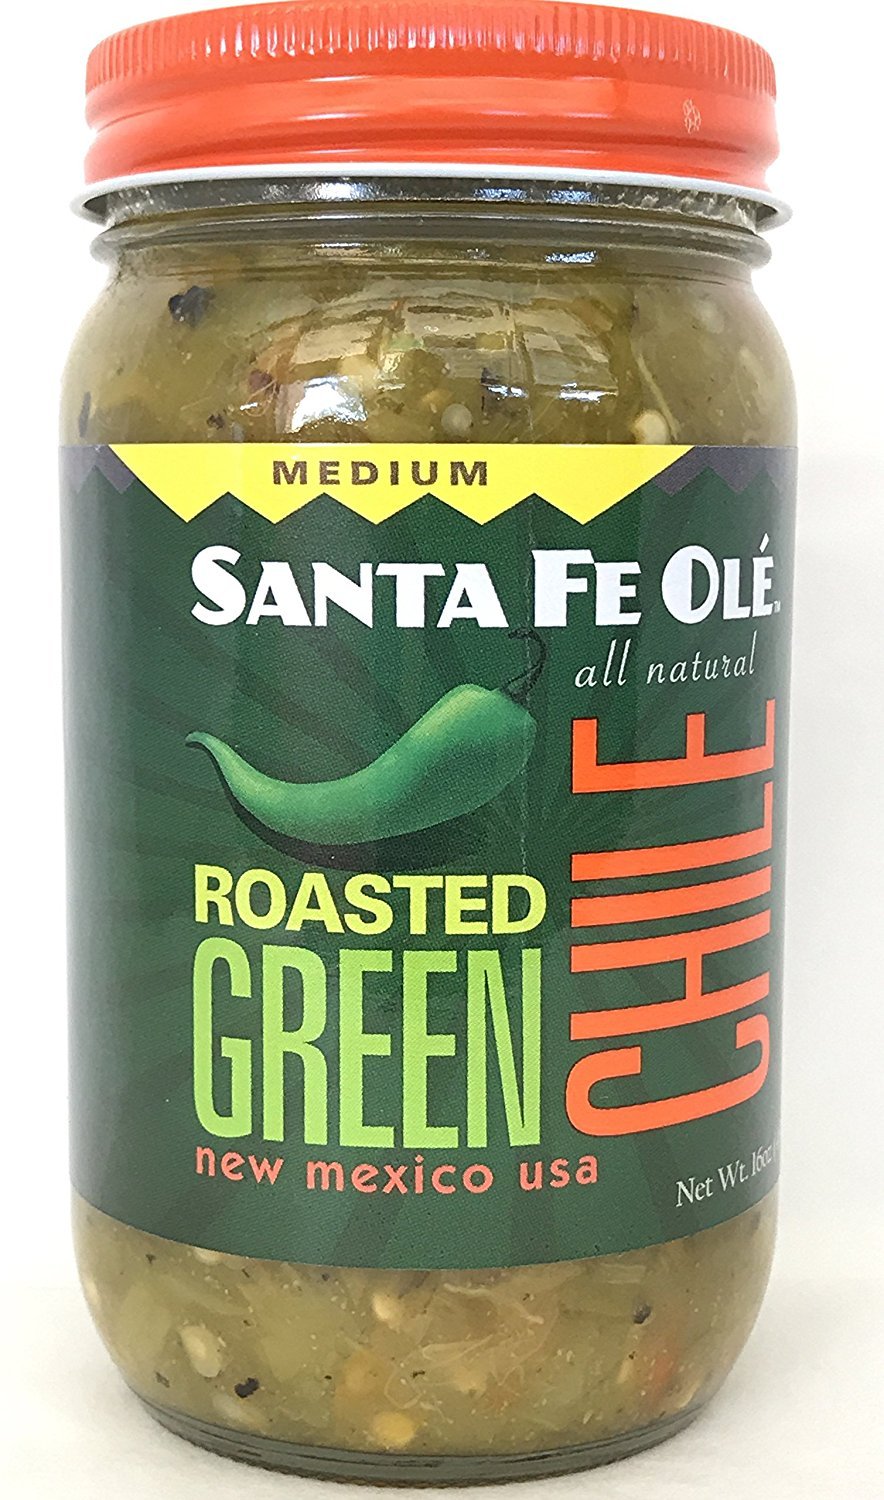 Santa Fe Ole Roasted Green Chile (Medium)